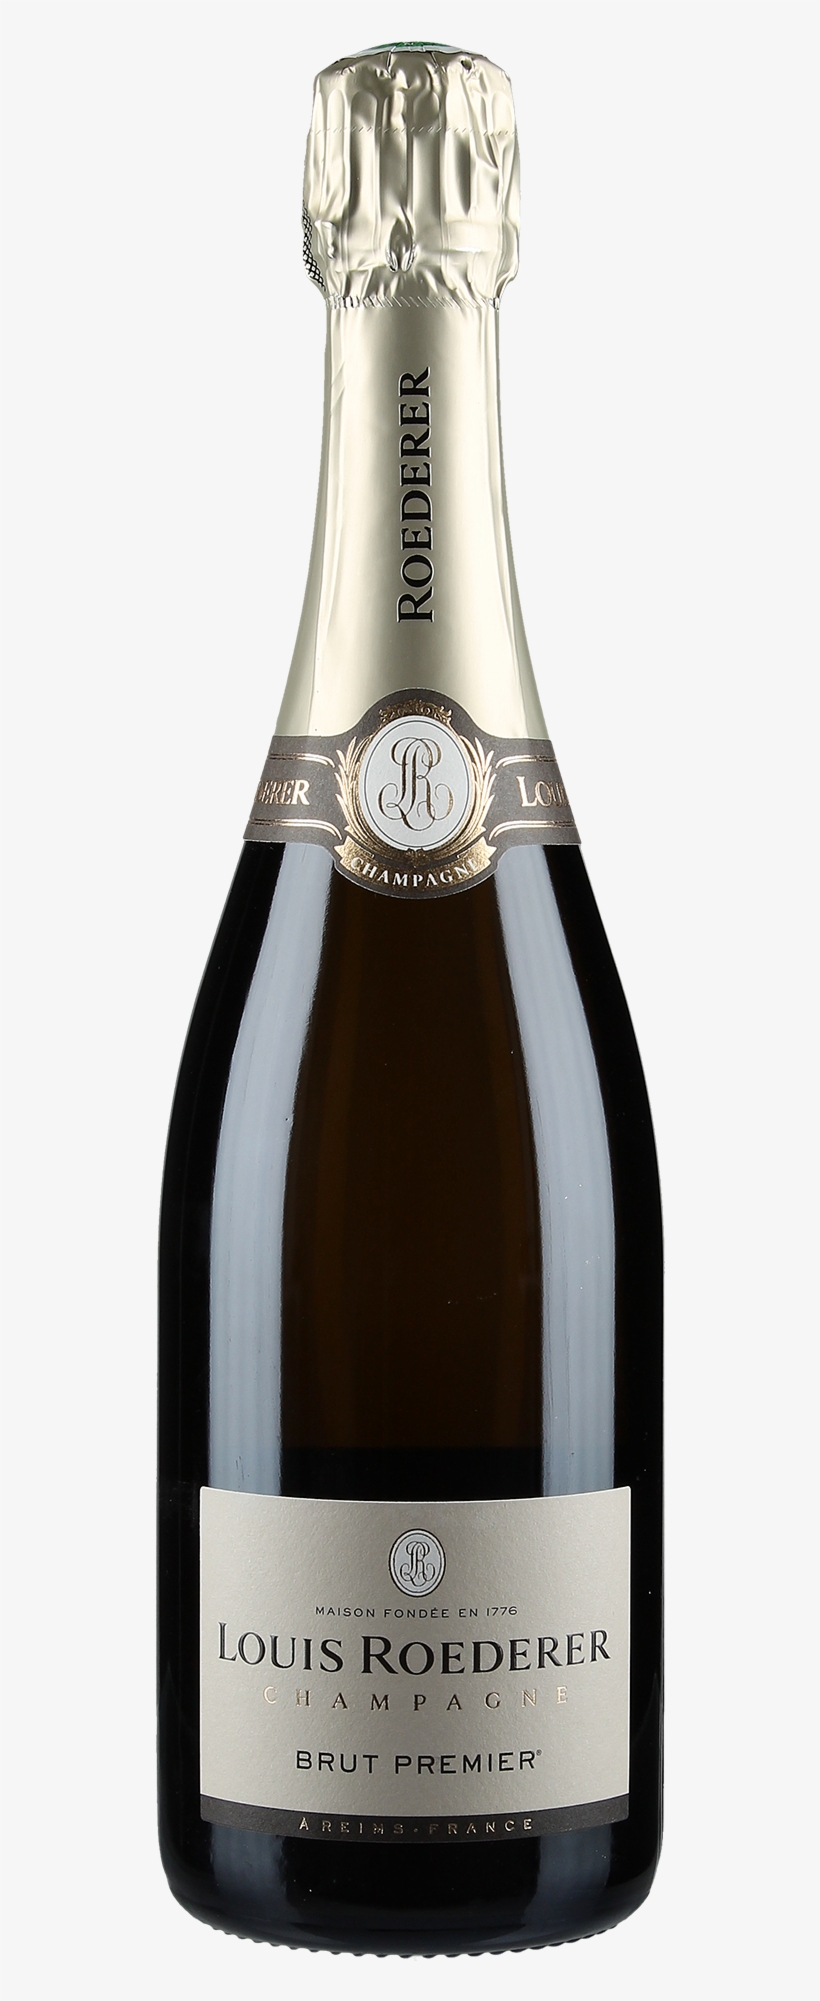 Advent Calendar - Champagne, transparent png #8139683